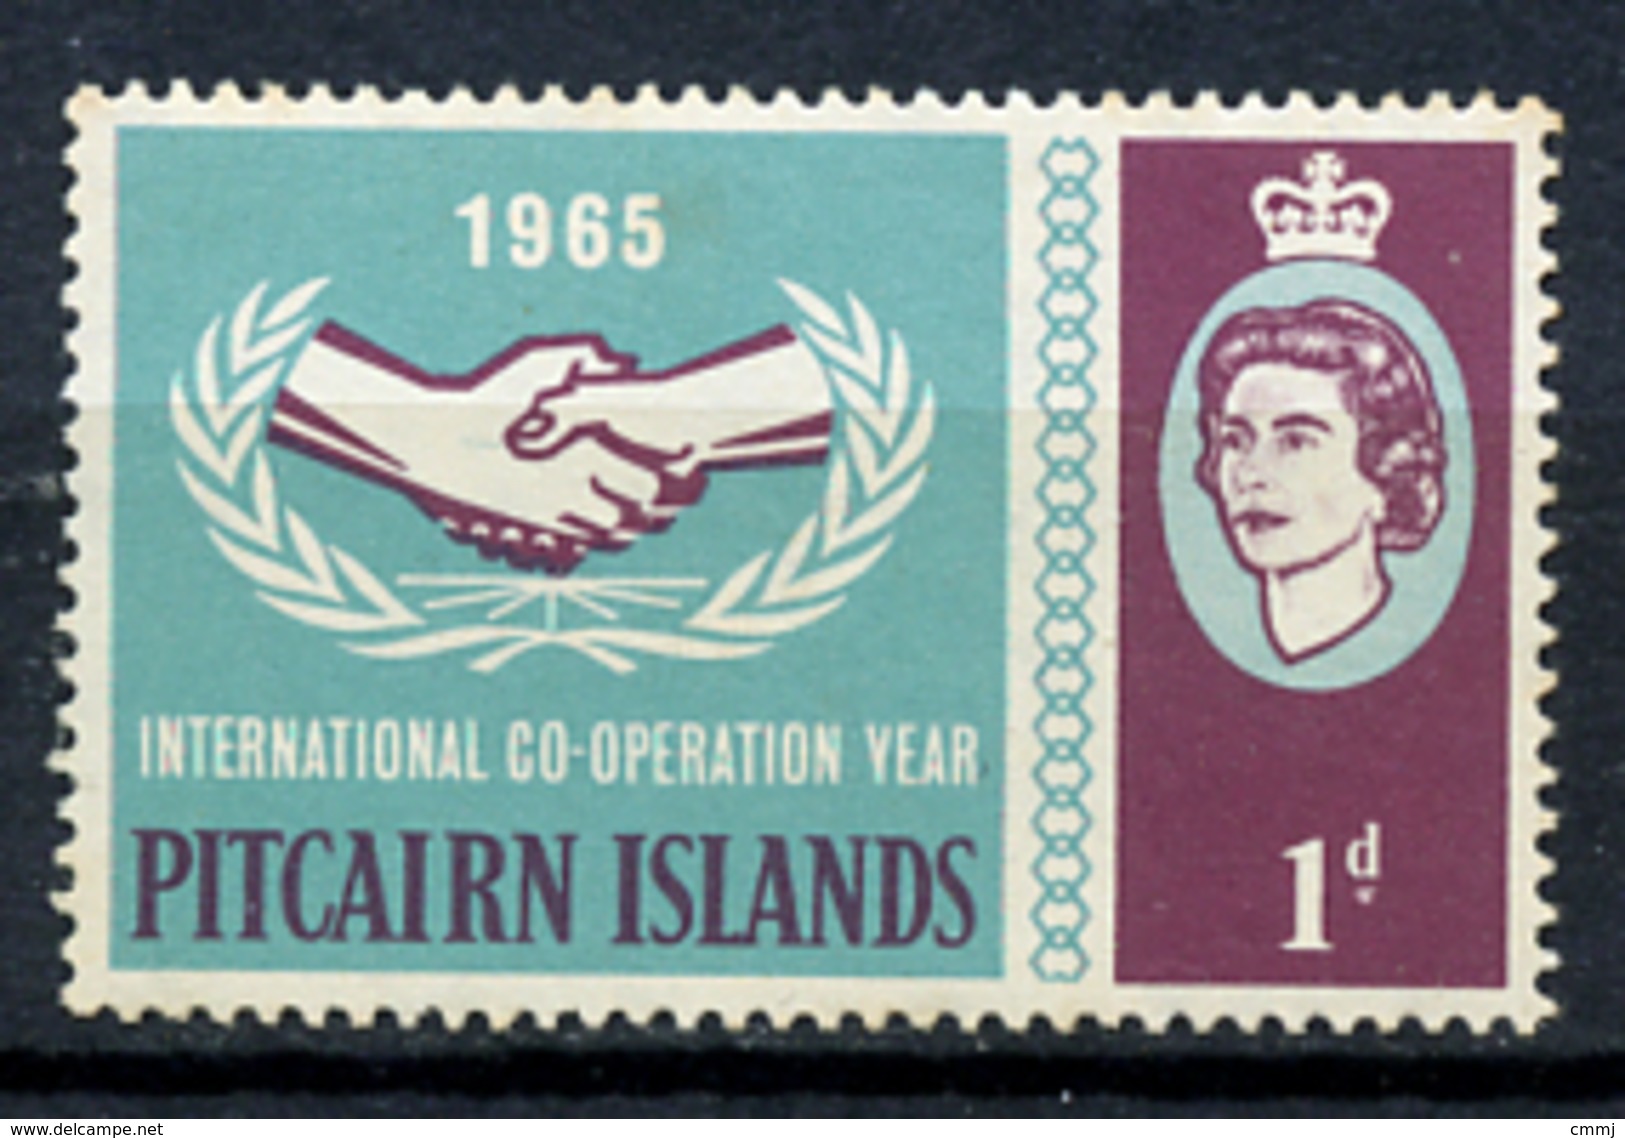 1965 - PITCAIRN INSLANDS - Catg. Mi. 54 - LH - (CW2427.04) - Pitcairn